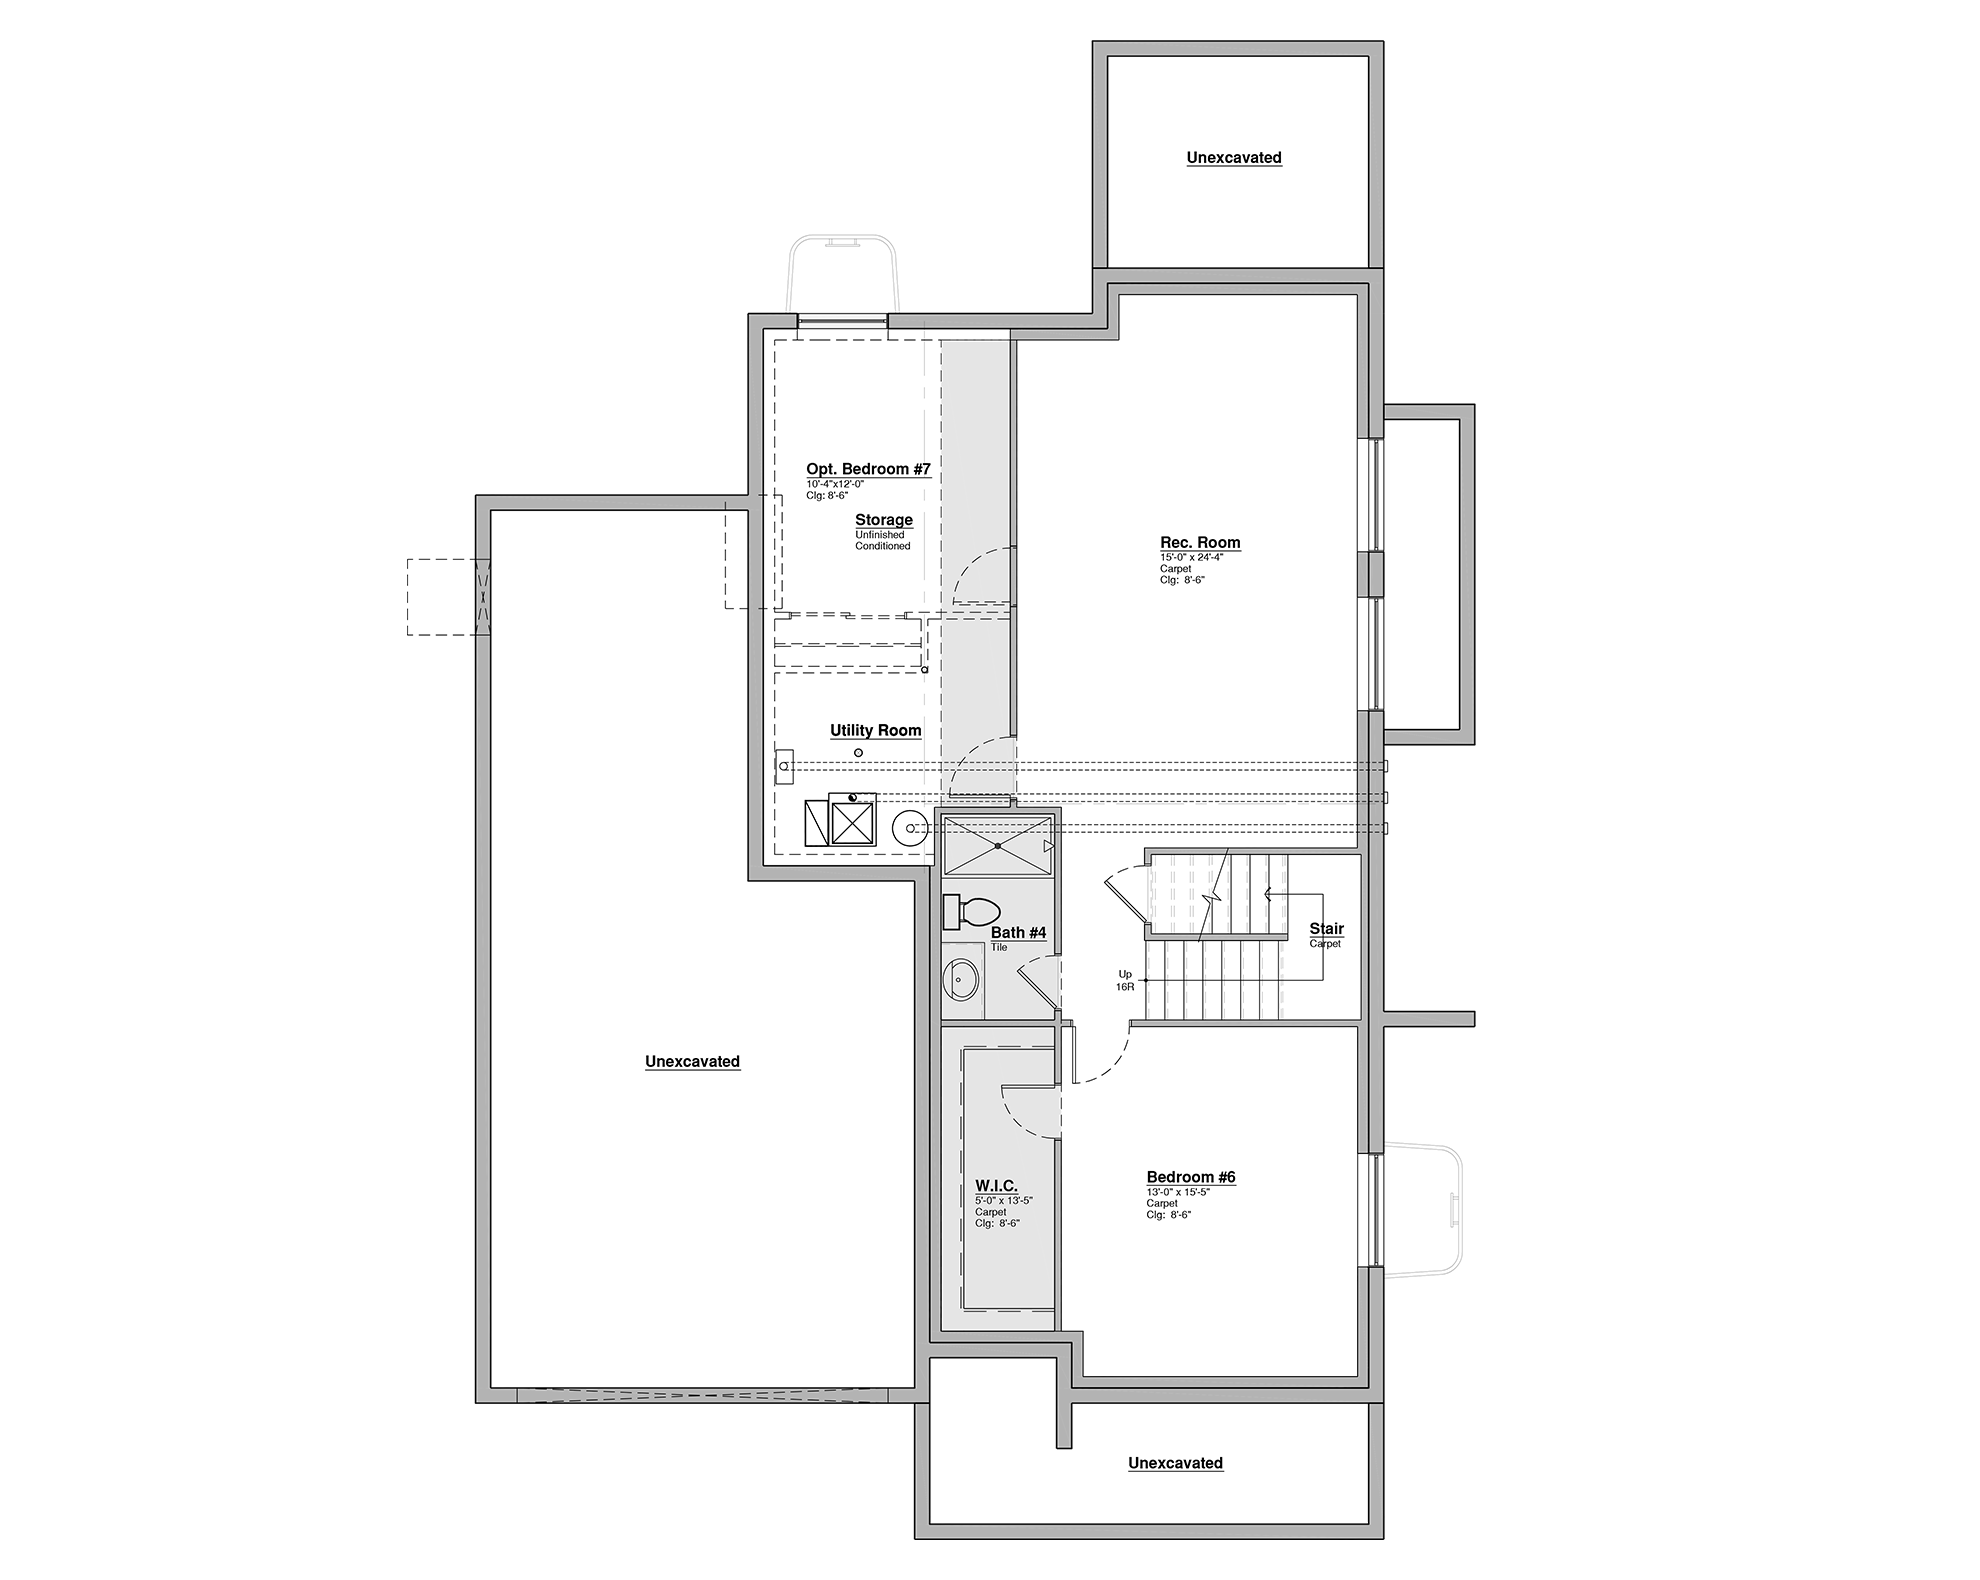 Semi-Custom Basement floor plan